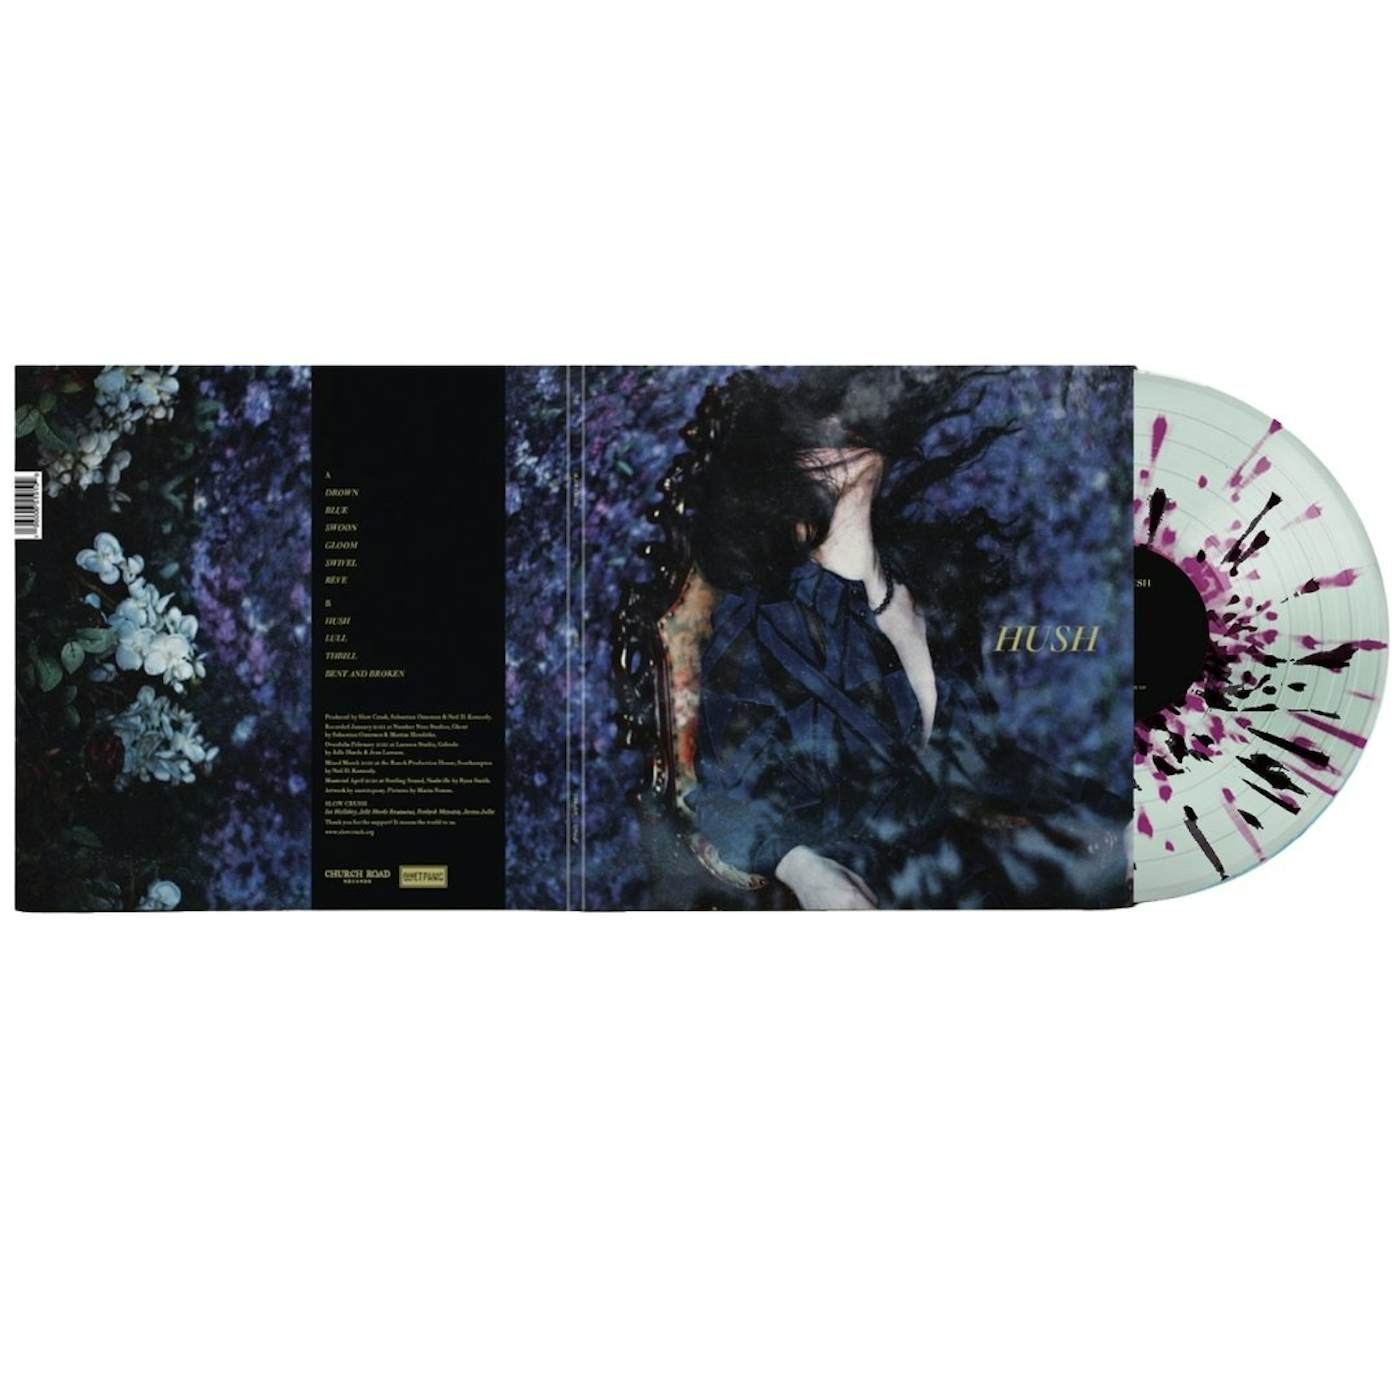 Slow Crush - “Hush" LP (White w/Orchid & Black Vinyl)*LIMITED EDITION* Vinyl in Gatefold Sleeve